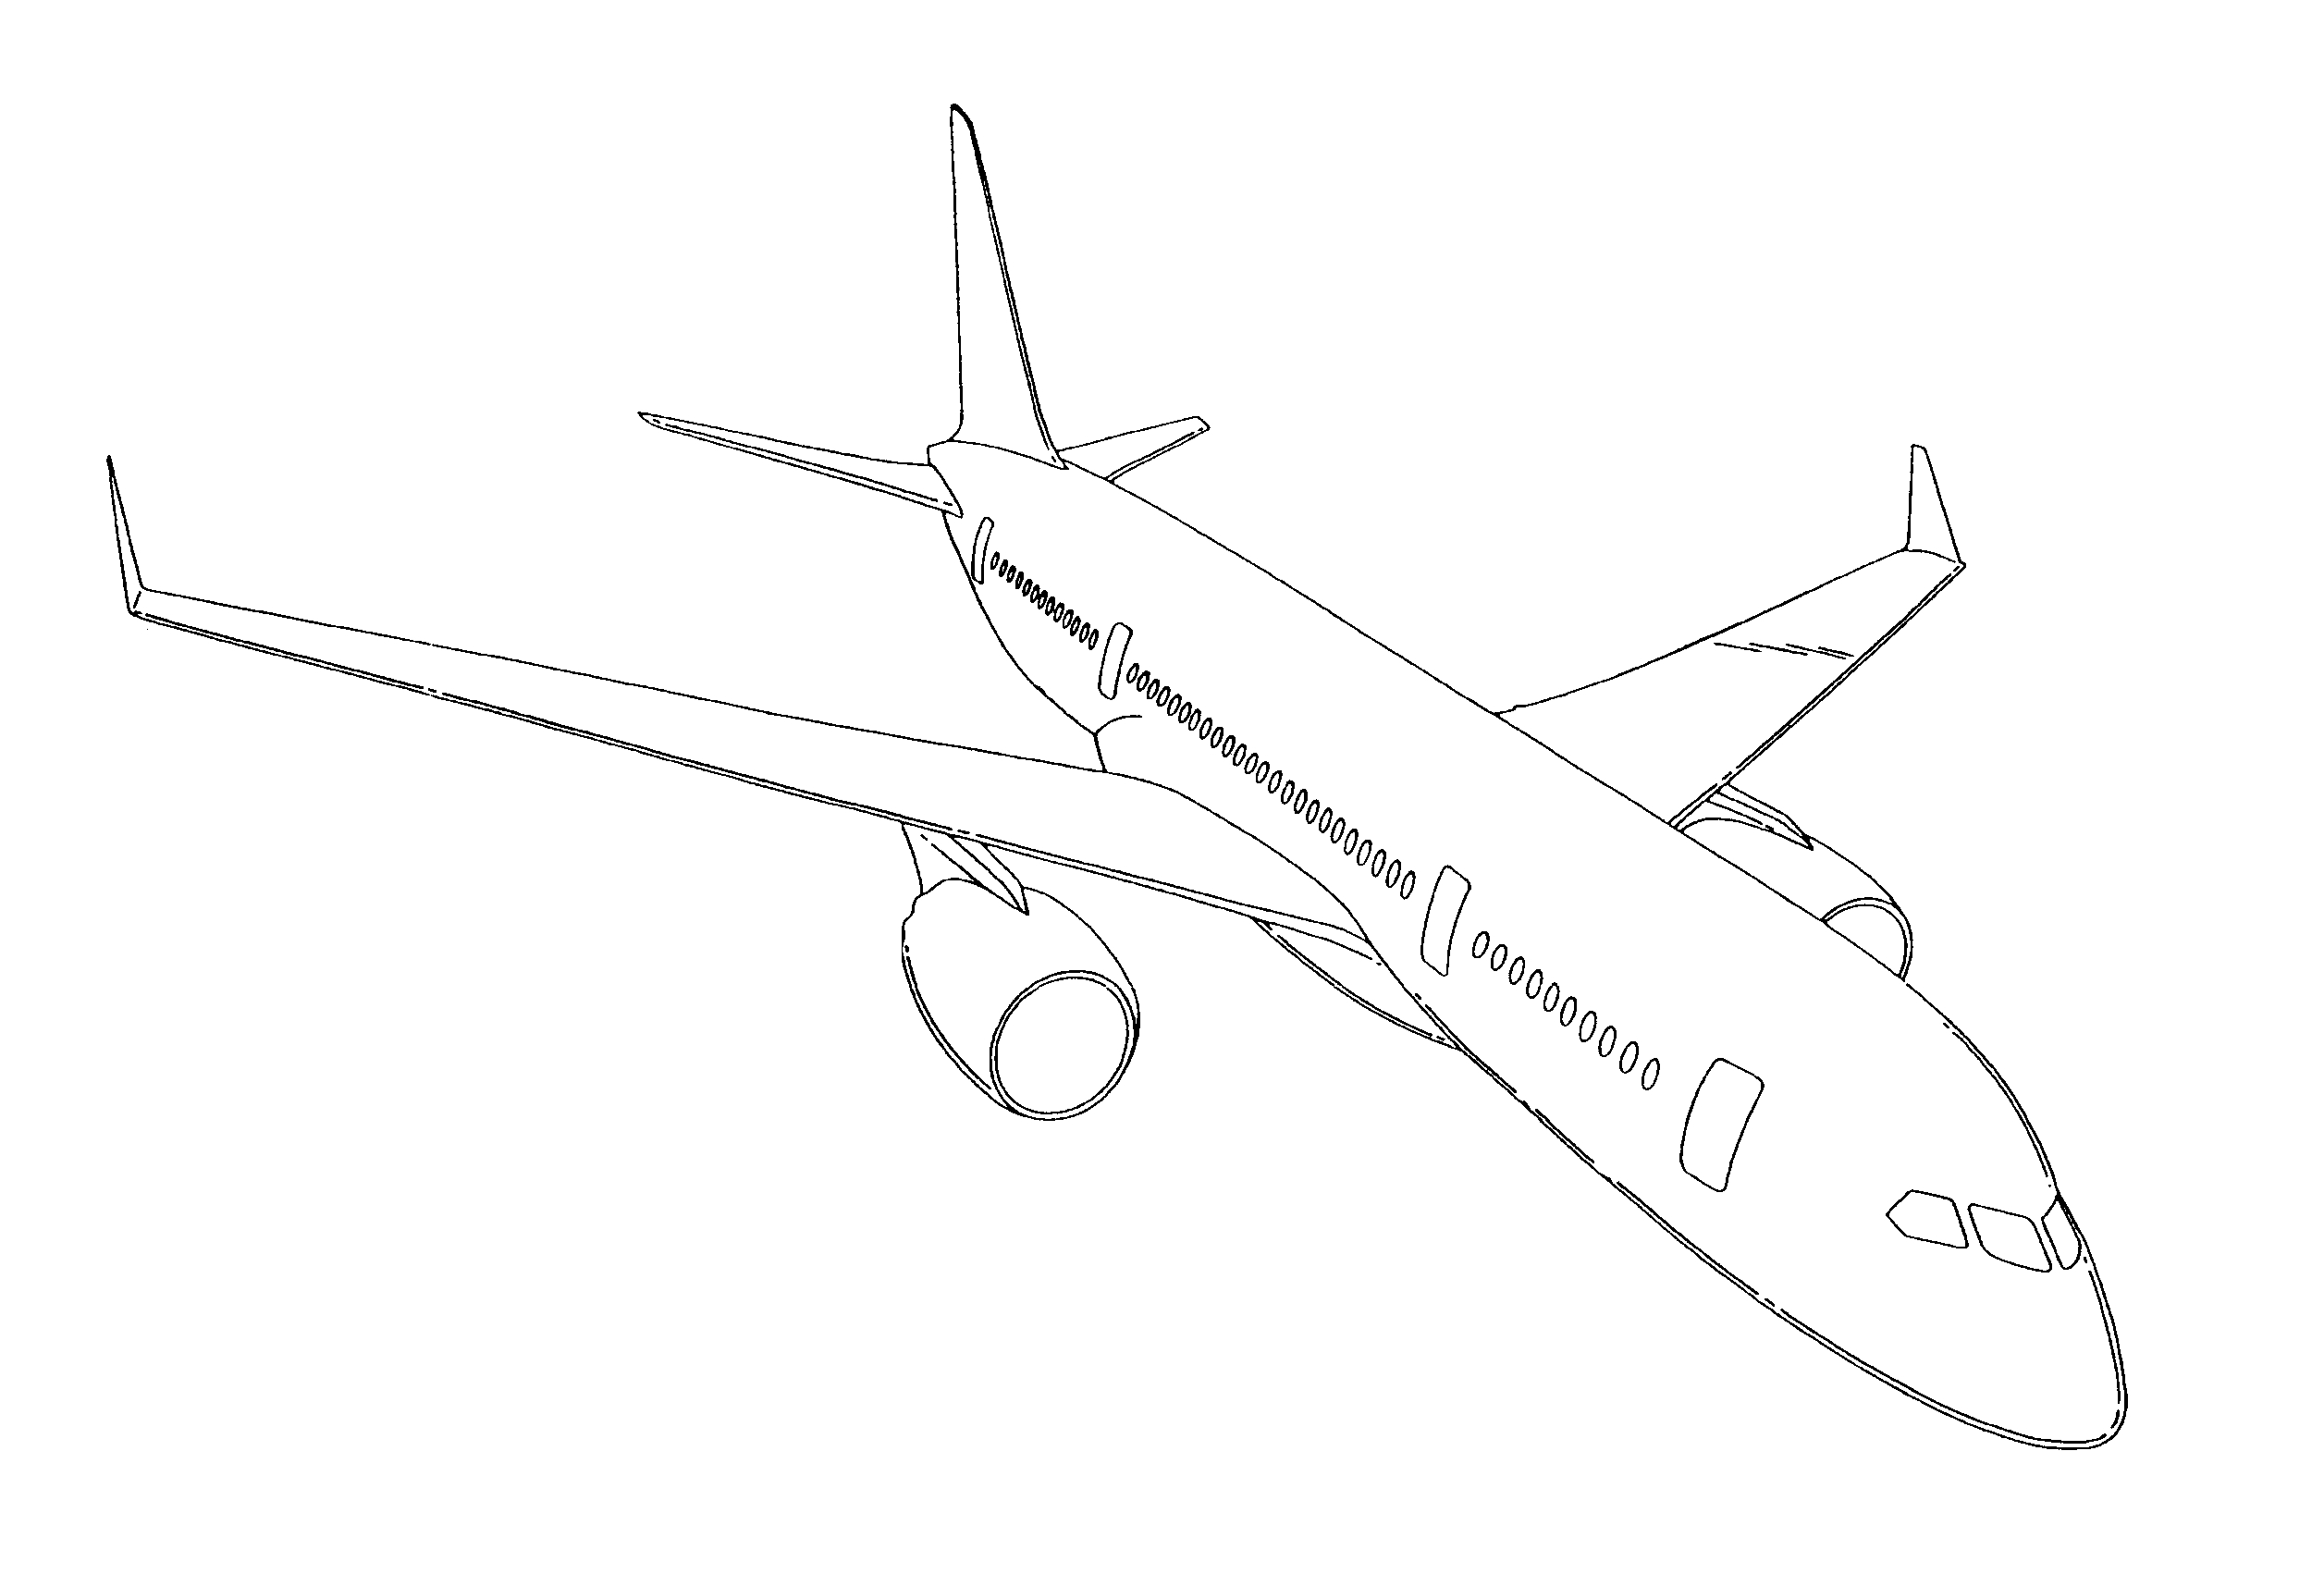 Free Airplane Drawing, Download Free Airplane Drawing png images, Free ...